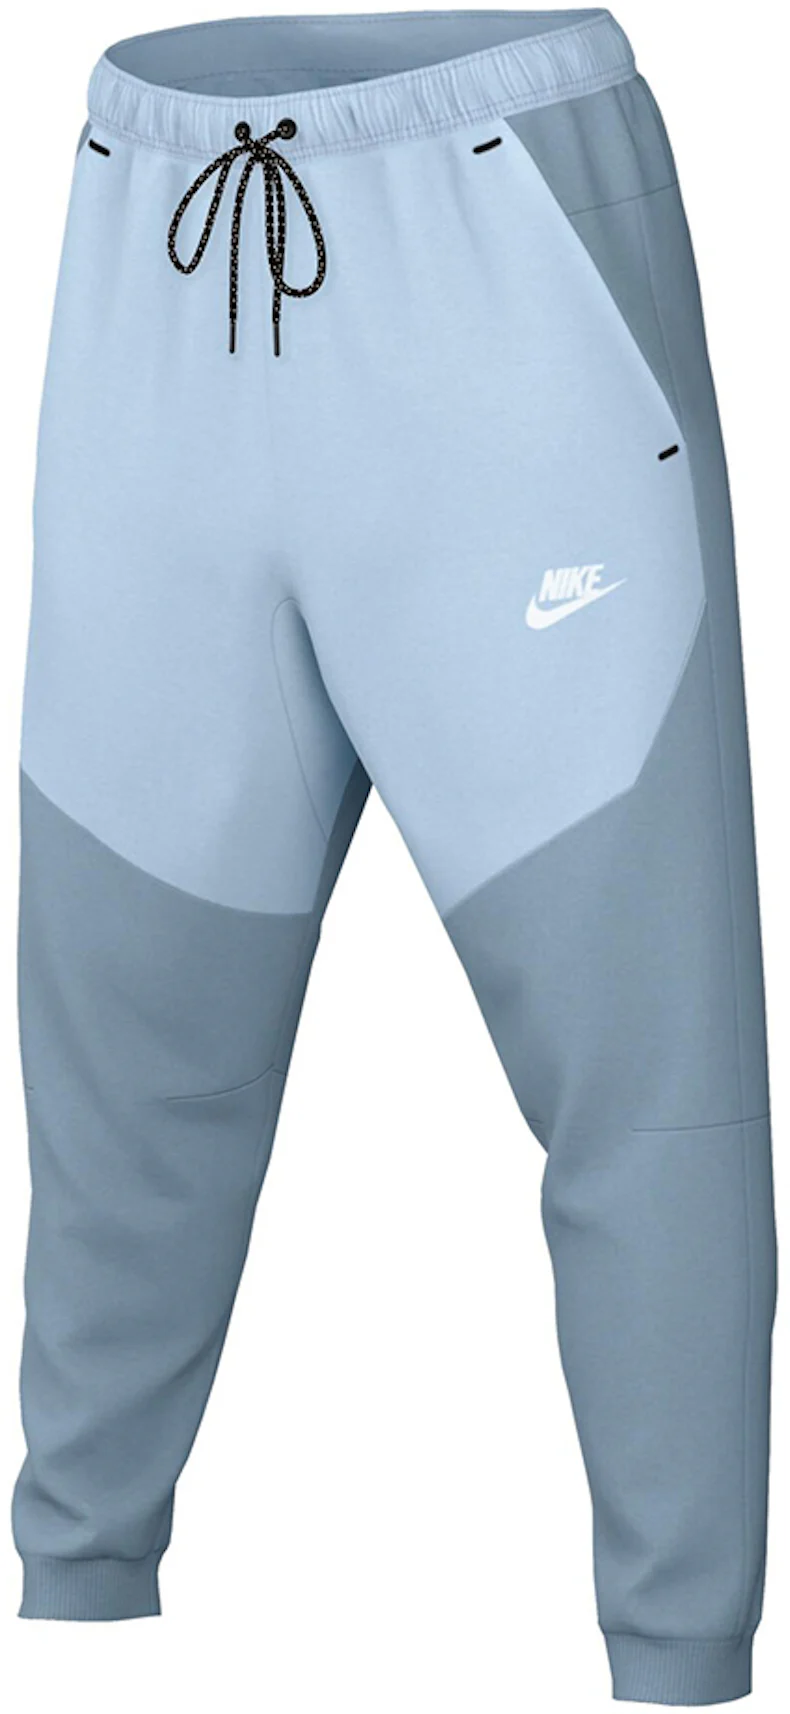 https://images.stockx.com/images/Nike-Sportswear-Tech-Fleece-Pant-Worn-Blue-Celestine-Blue-White.jpg?fit=fill&bg=FFFFFF&w=1200&h=857&fm=webp&auto=compress&dpr=2&trim=color&updated_at=1673045980&q=60